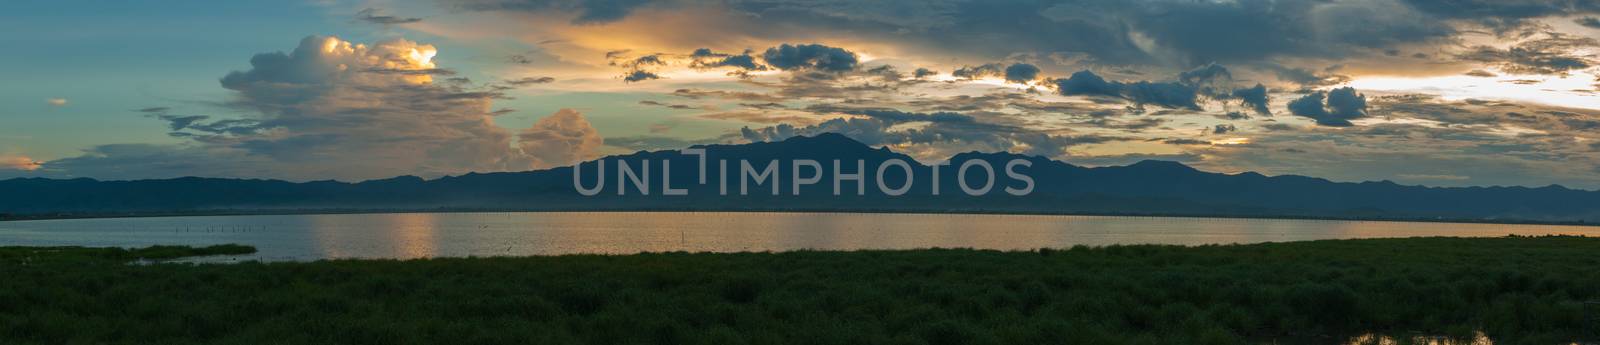 Sunset time Panorama at Kwan Phayao lake, Phayao province, Thailand by Custo609